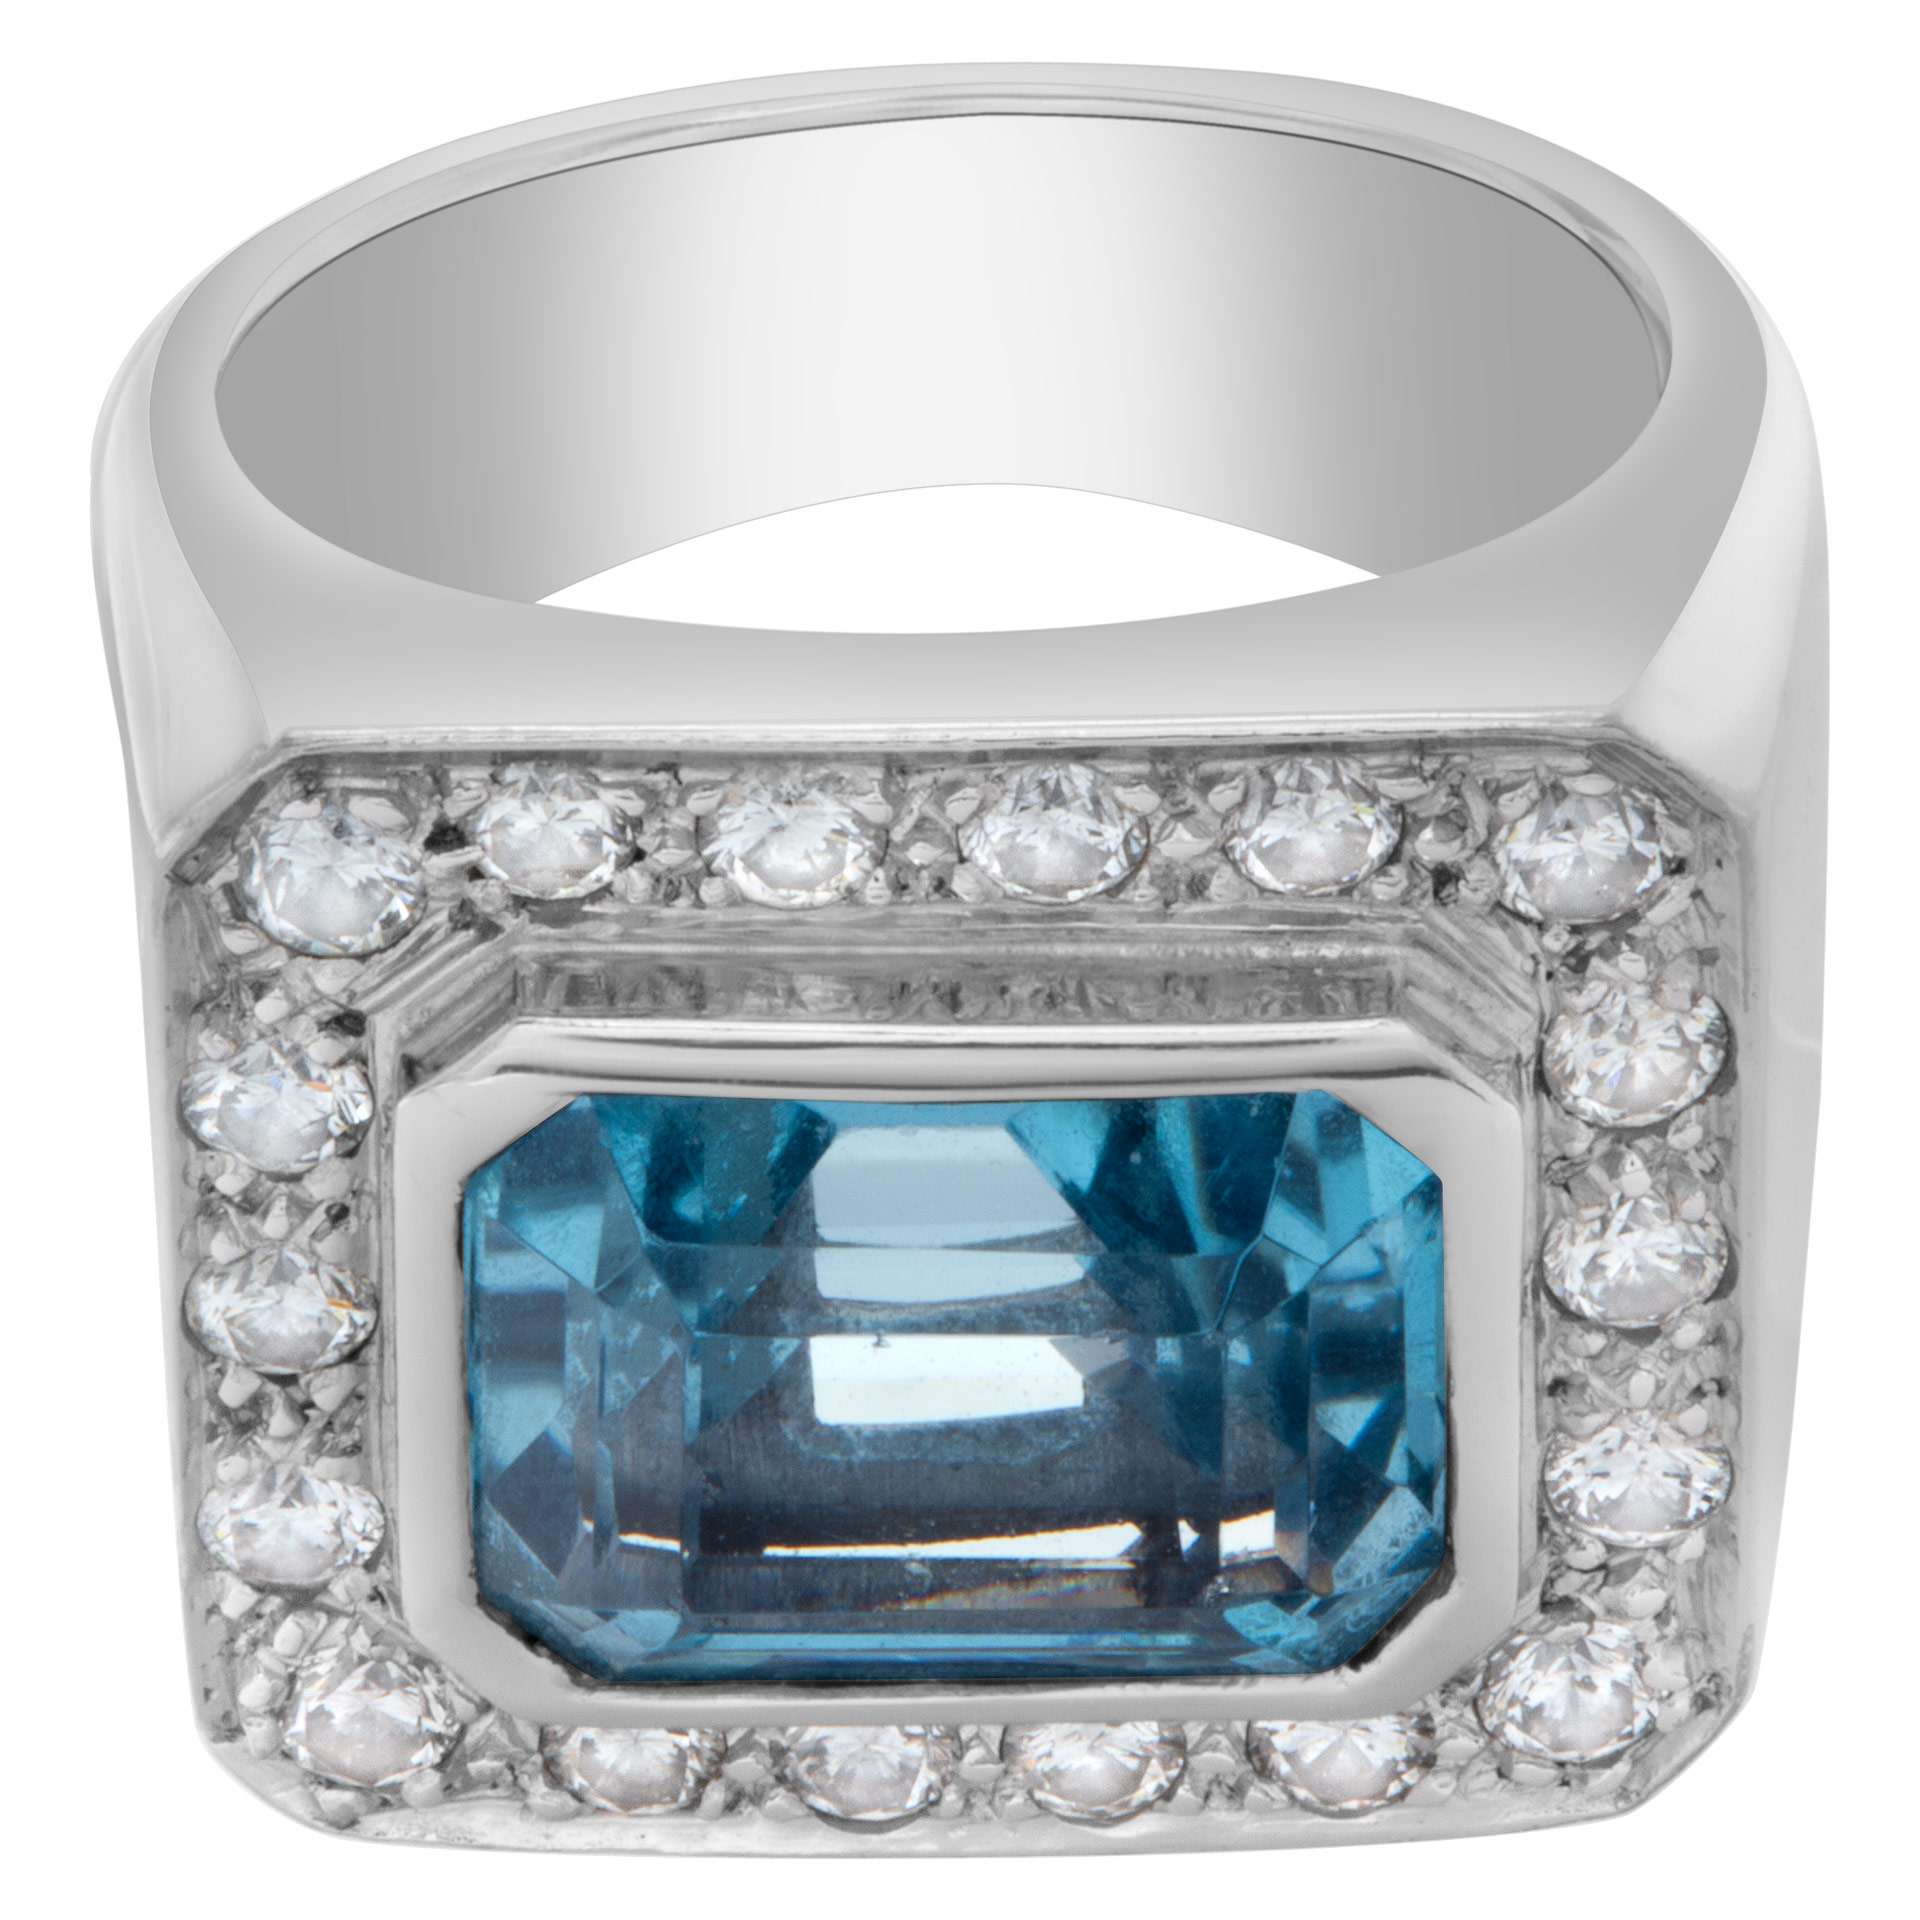 Blue topaz ring in 18k white gold with diamonds